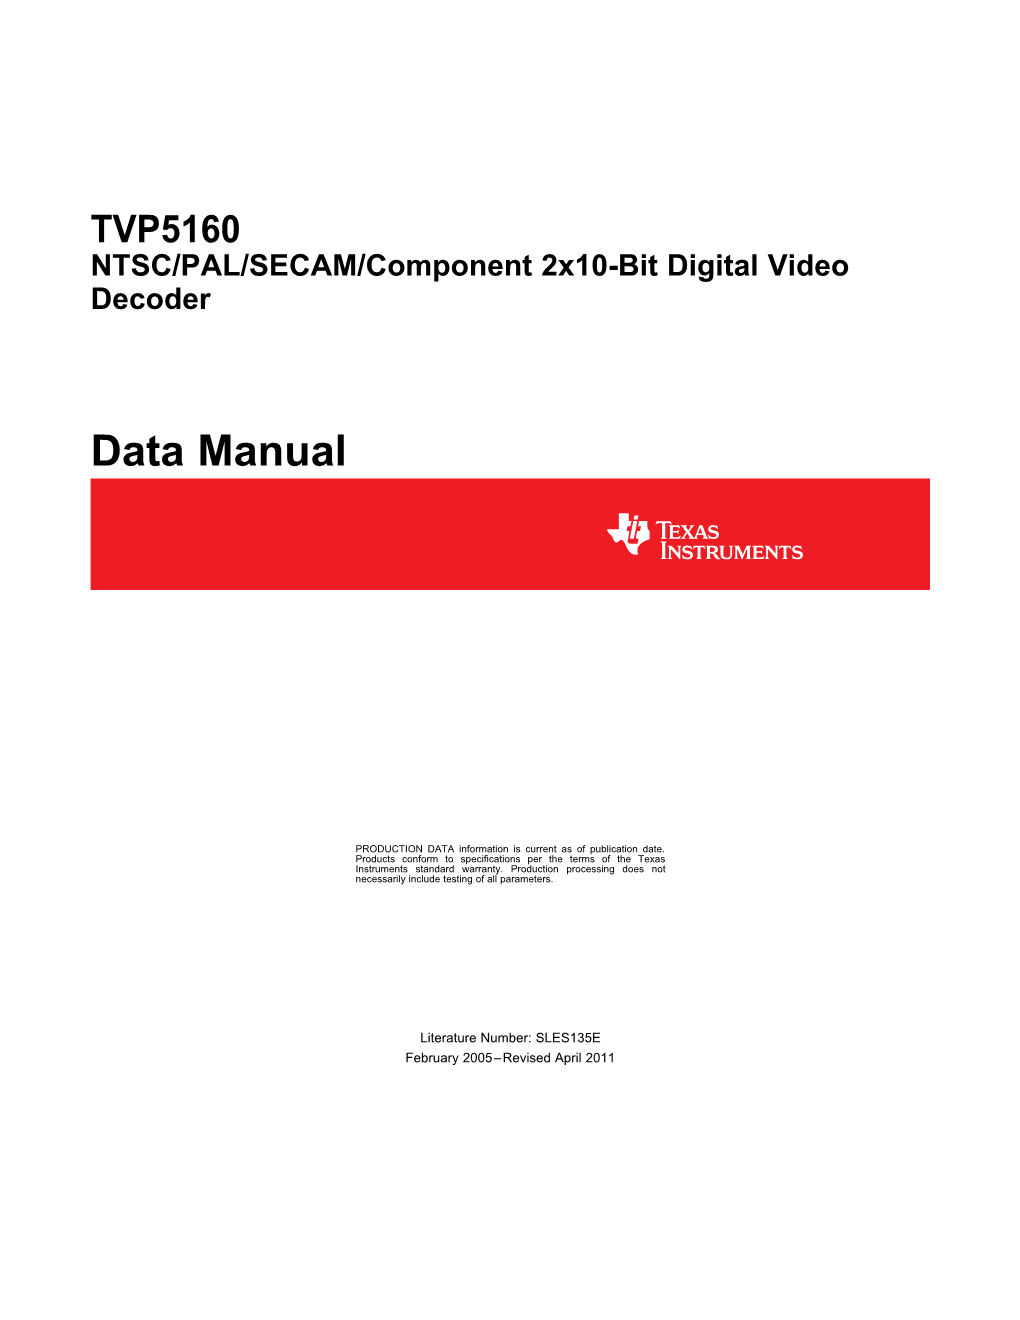 TVP5160 NTSC/PAL/SECAM/Component 2X10-Bit Digital Video Decoder